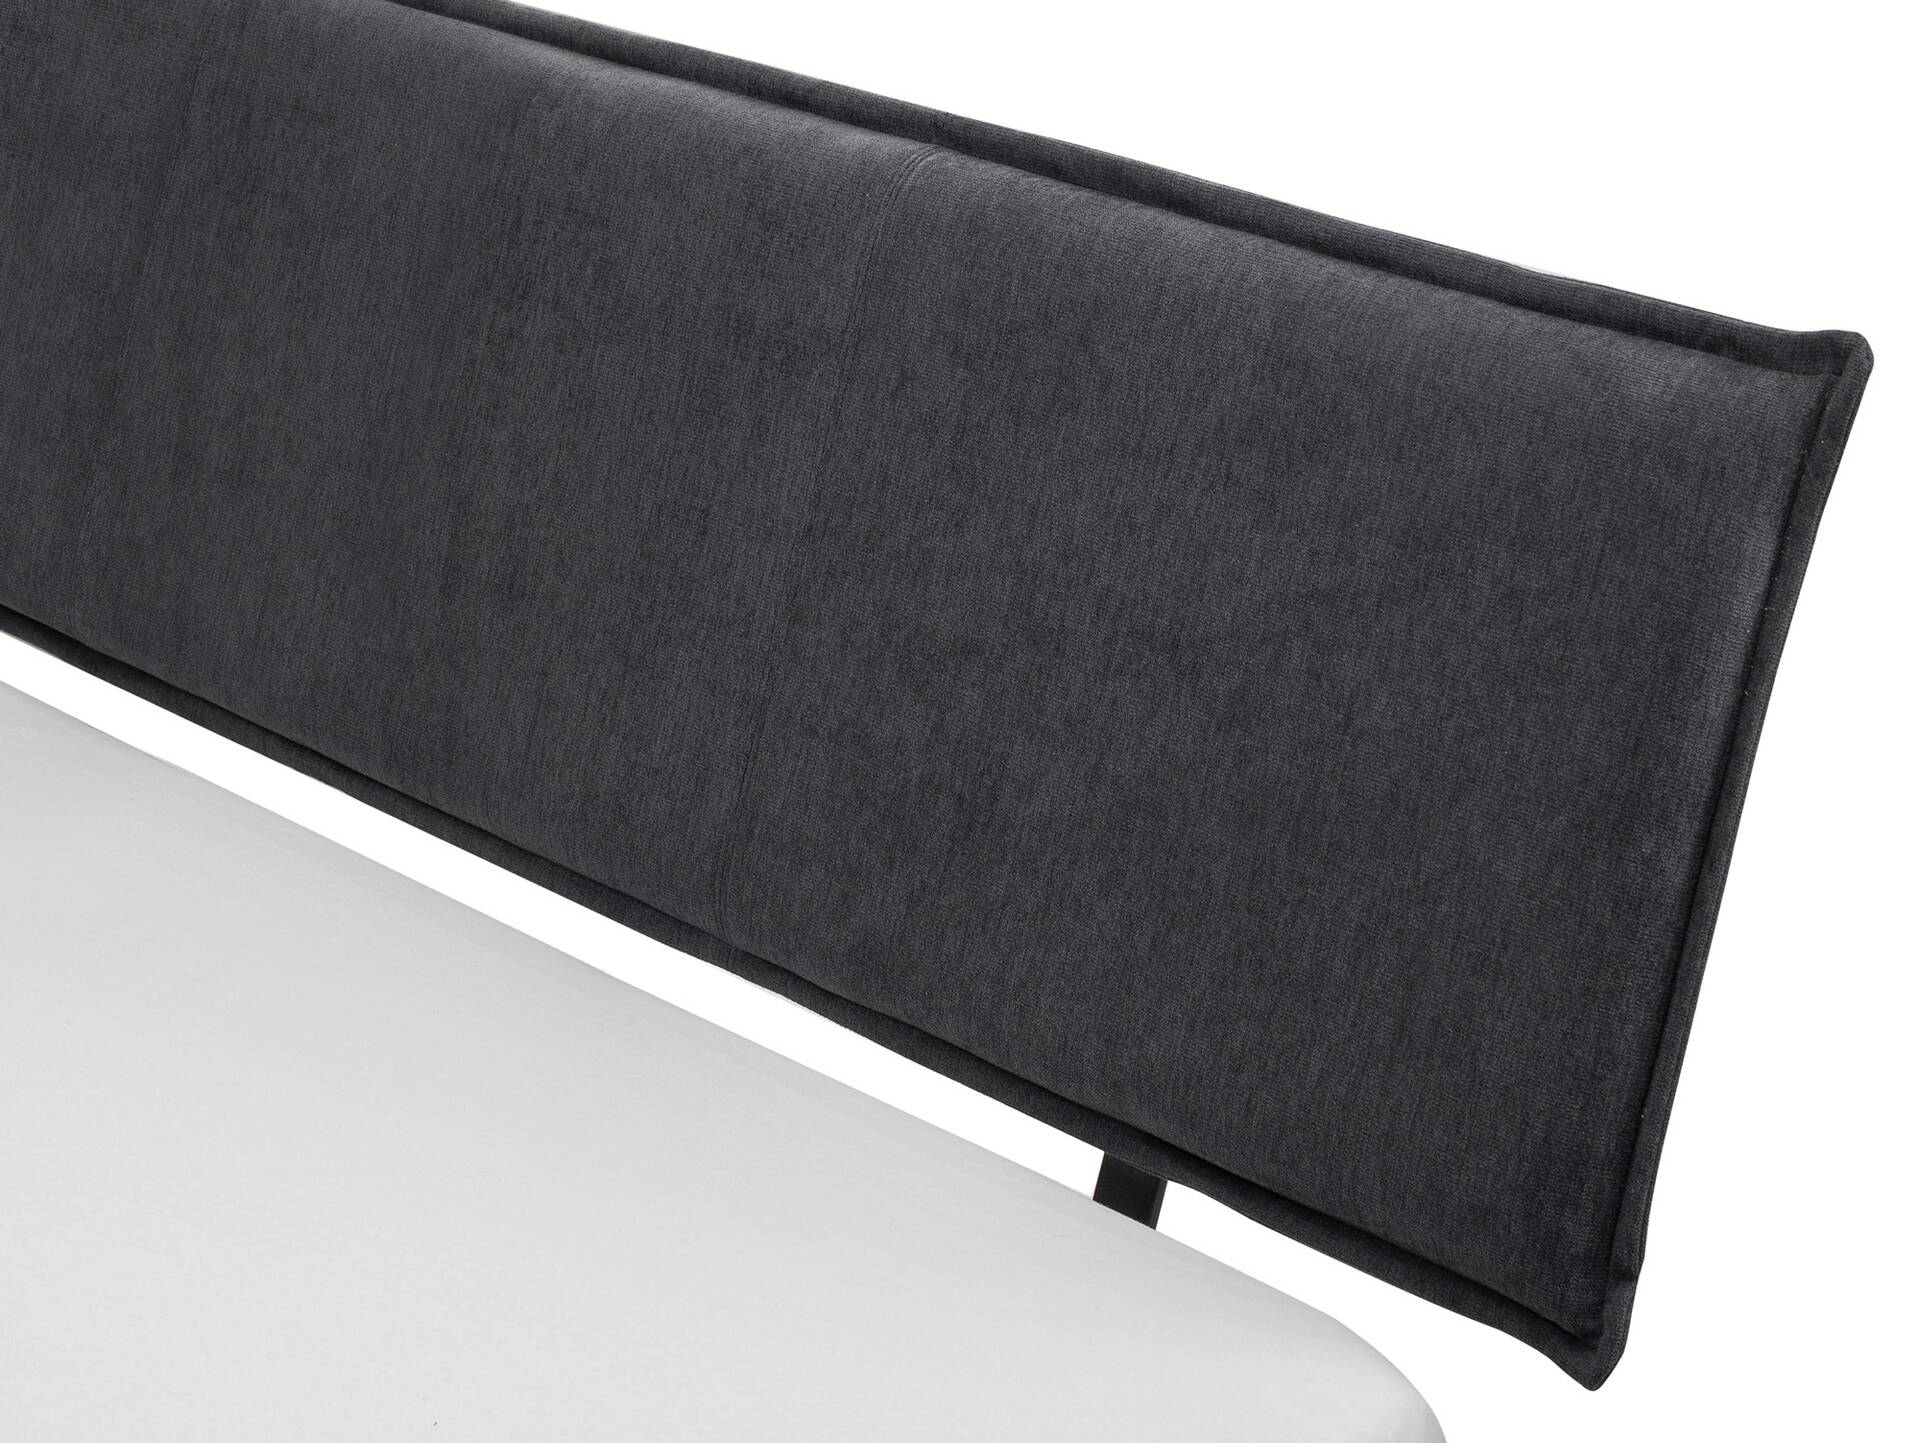 CALIDO 4-Fuß-Bett mit Polster-Kopfteil, Material Massivholz 90 x 220 cm | Buche weiss lackiert | Stoff Anthrazit | Komforthöhe